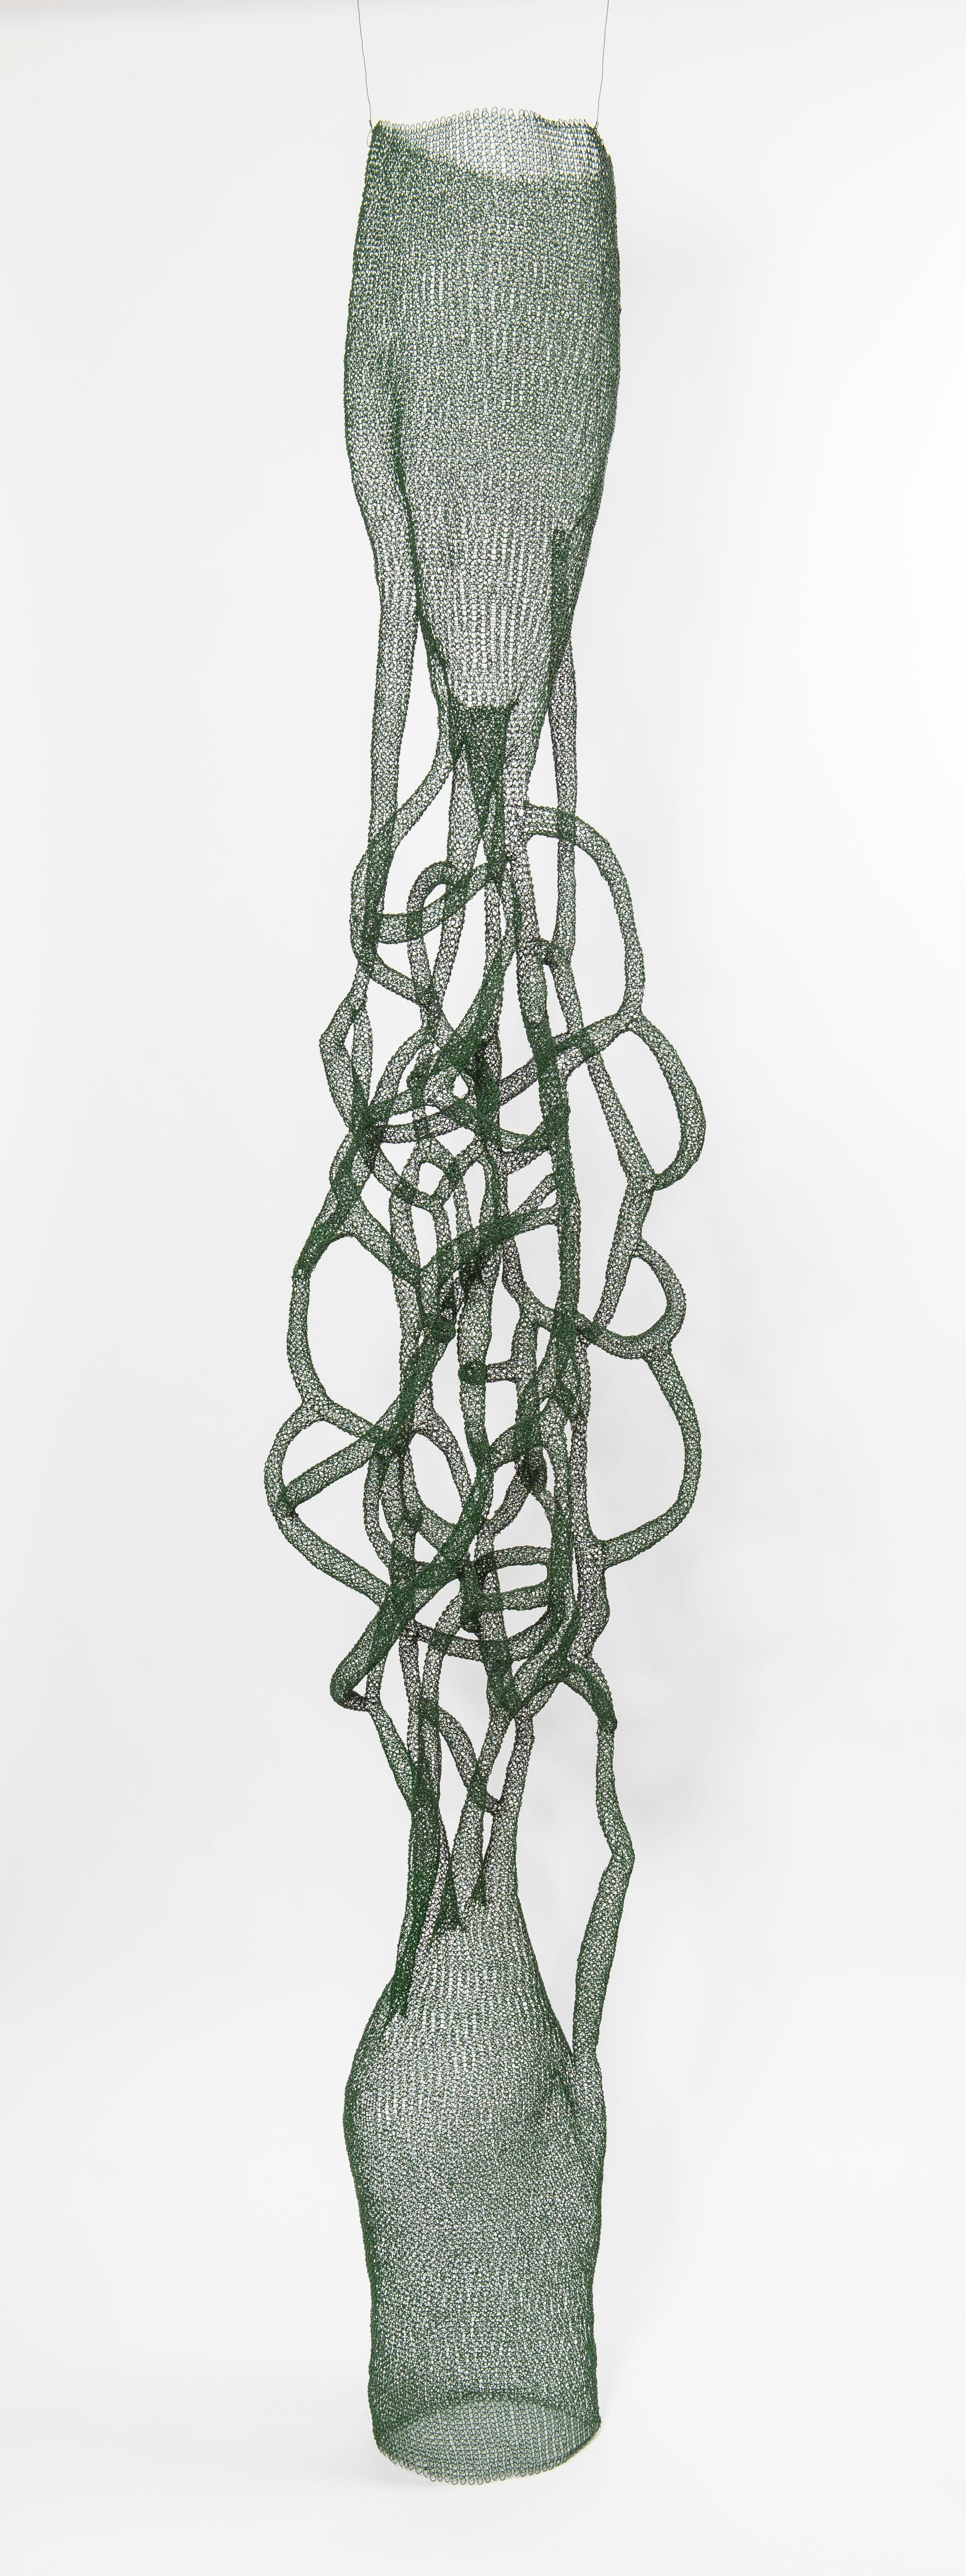 Delphine Grandvaux Figurative Sculpture - "In Between", Hand Knitted Airy Metal Transparent Green Pendant Tall Sculpture